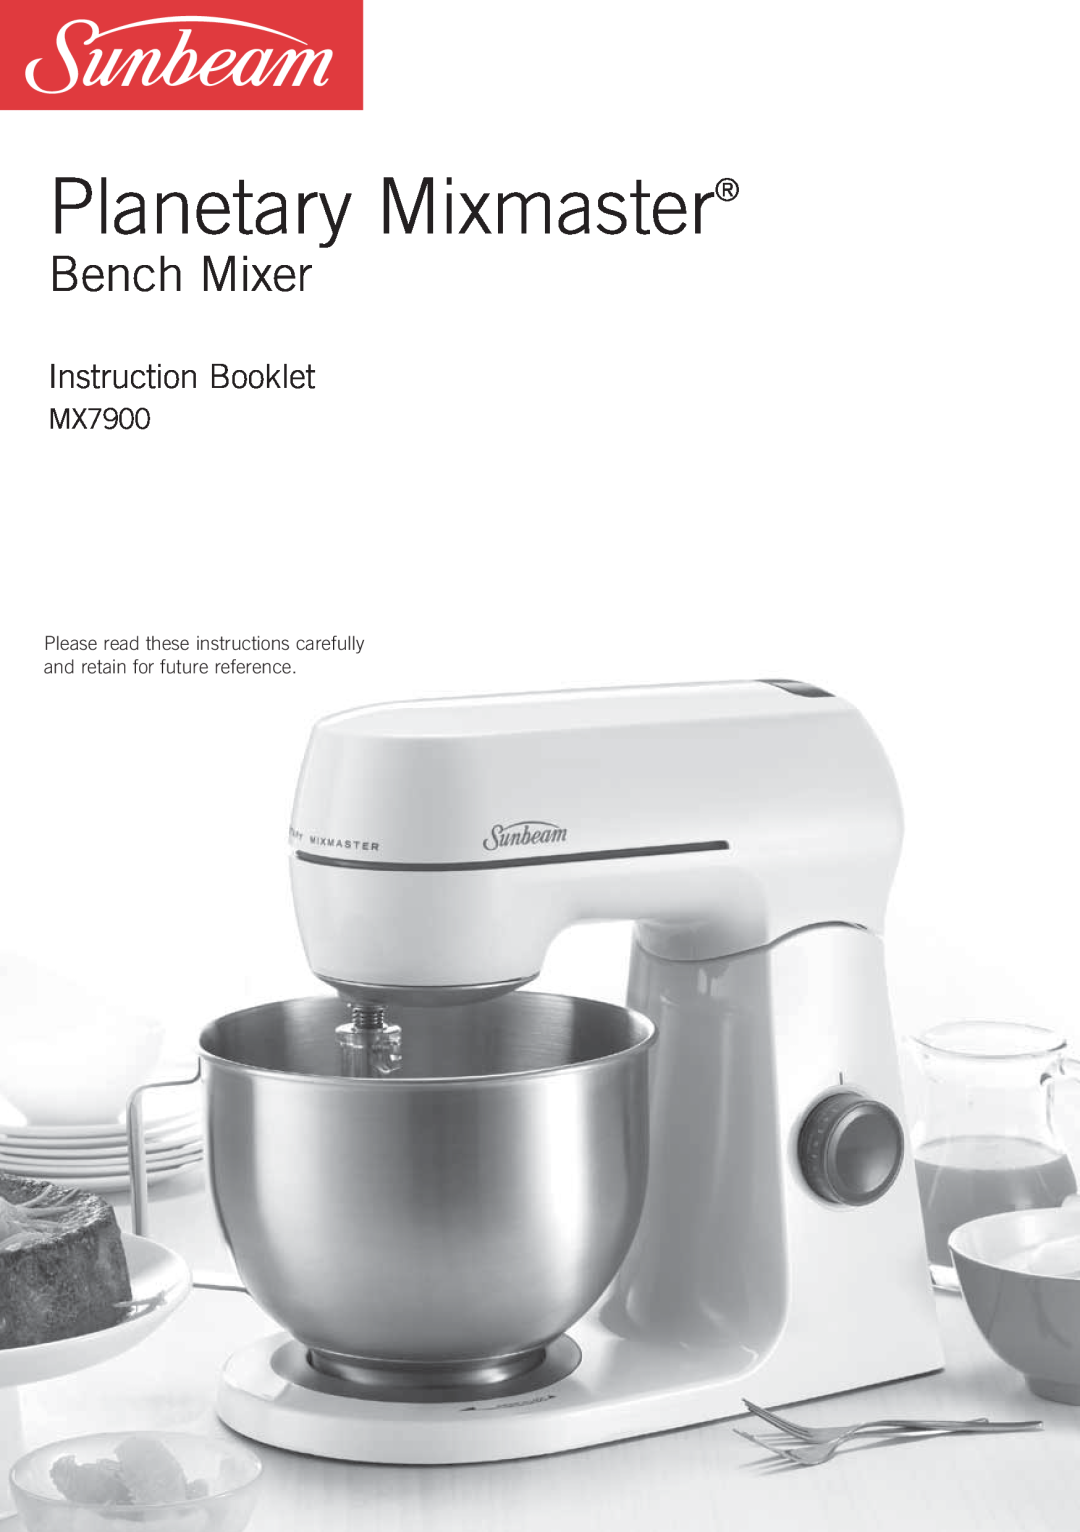 Sunbeam MX7900 manual Planetary Mixmaster, Bench Mixer, Instruction Booklet 